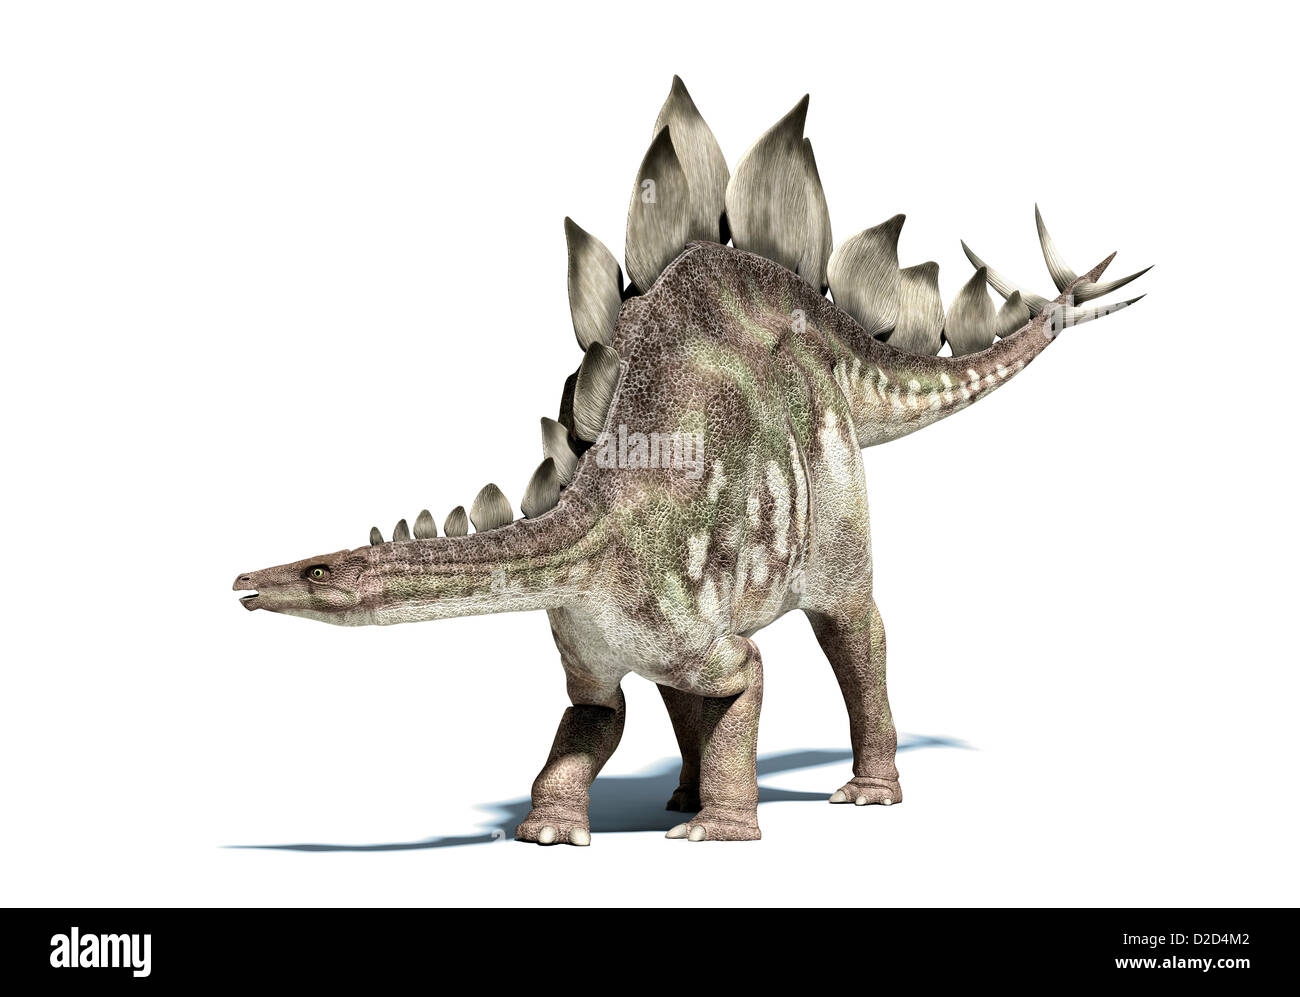 Dinosauro Stegosaurus dinosauro erbivoro vissuto durante la tomaia giurassico Foto Stock